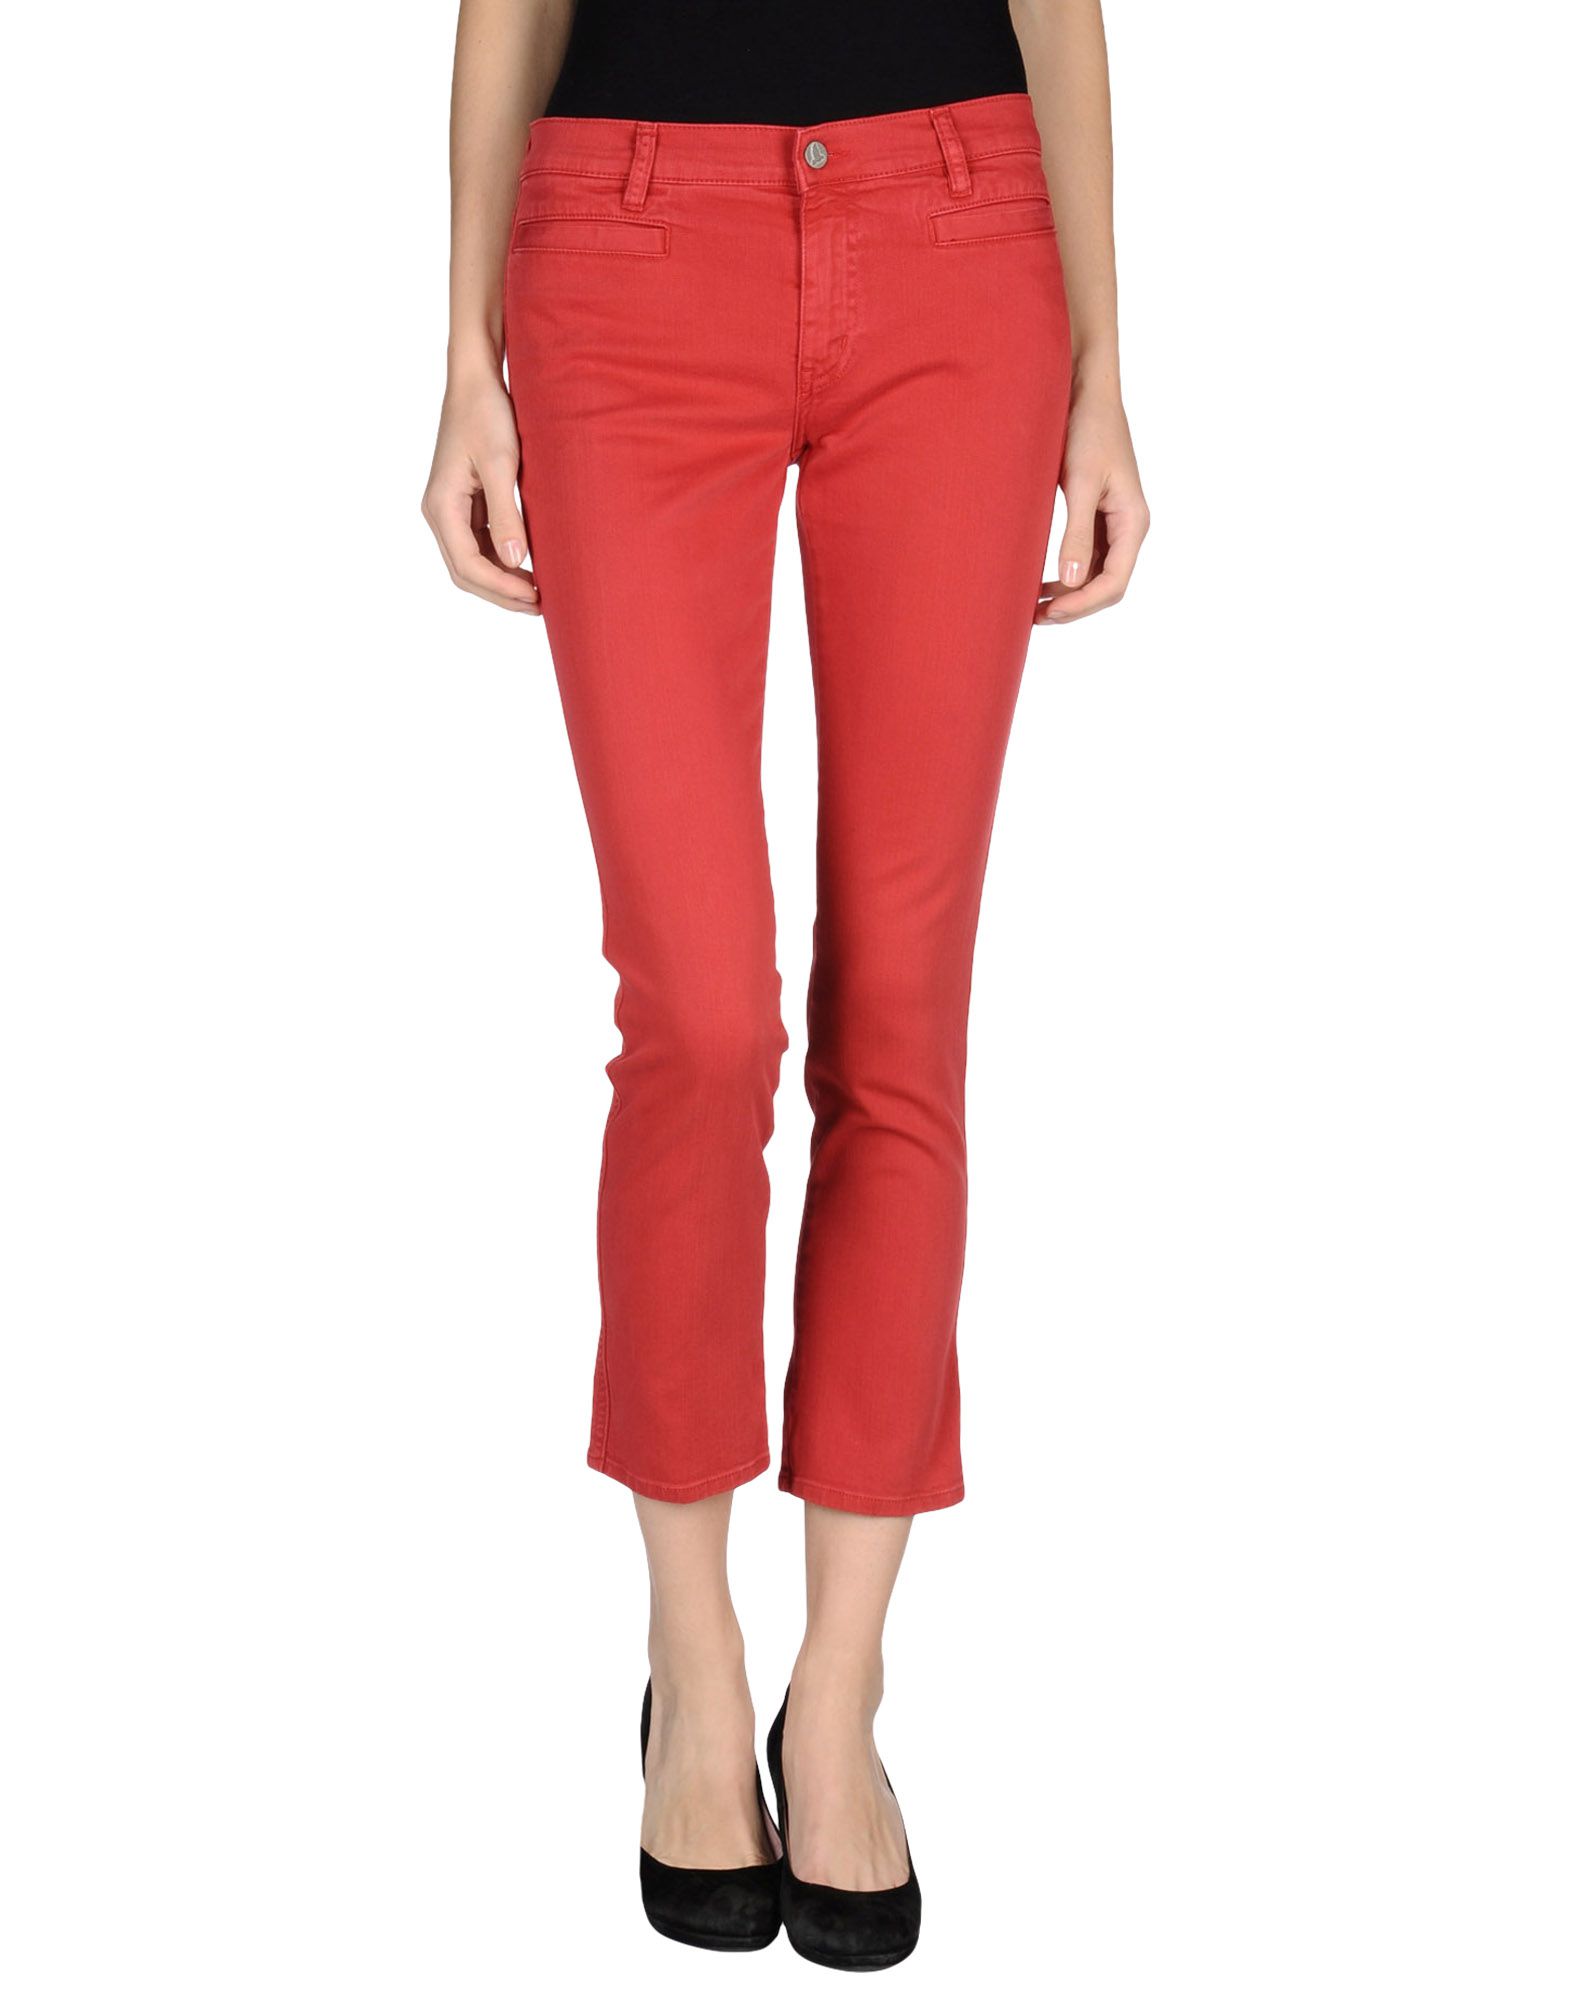 Foto Mih-Jeans Pantalones Vaqueros Mujer Rojo